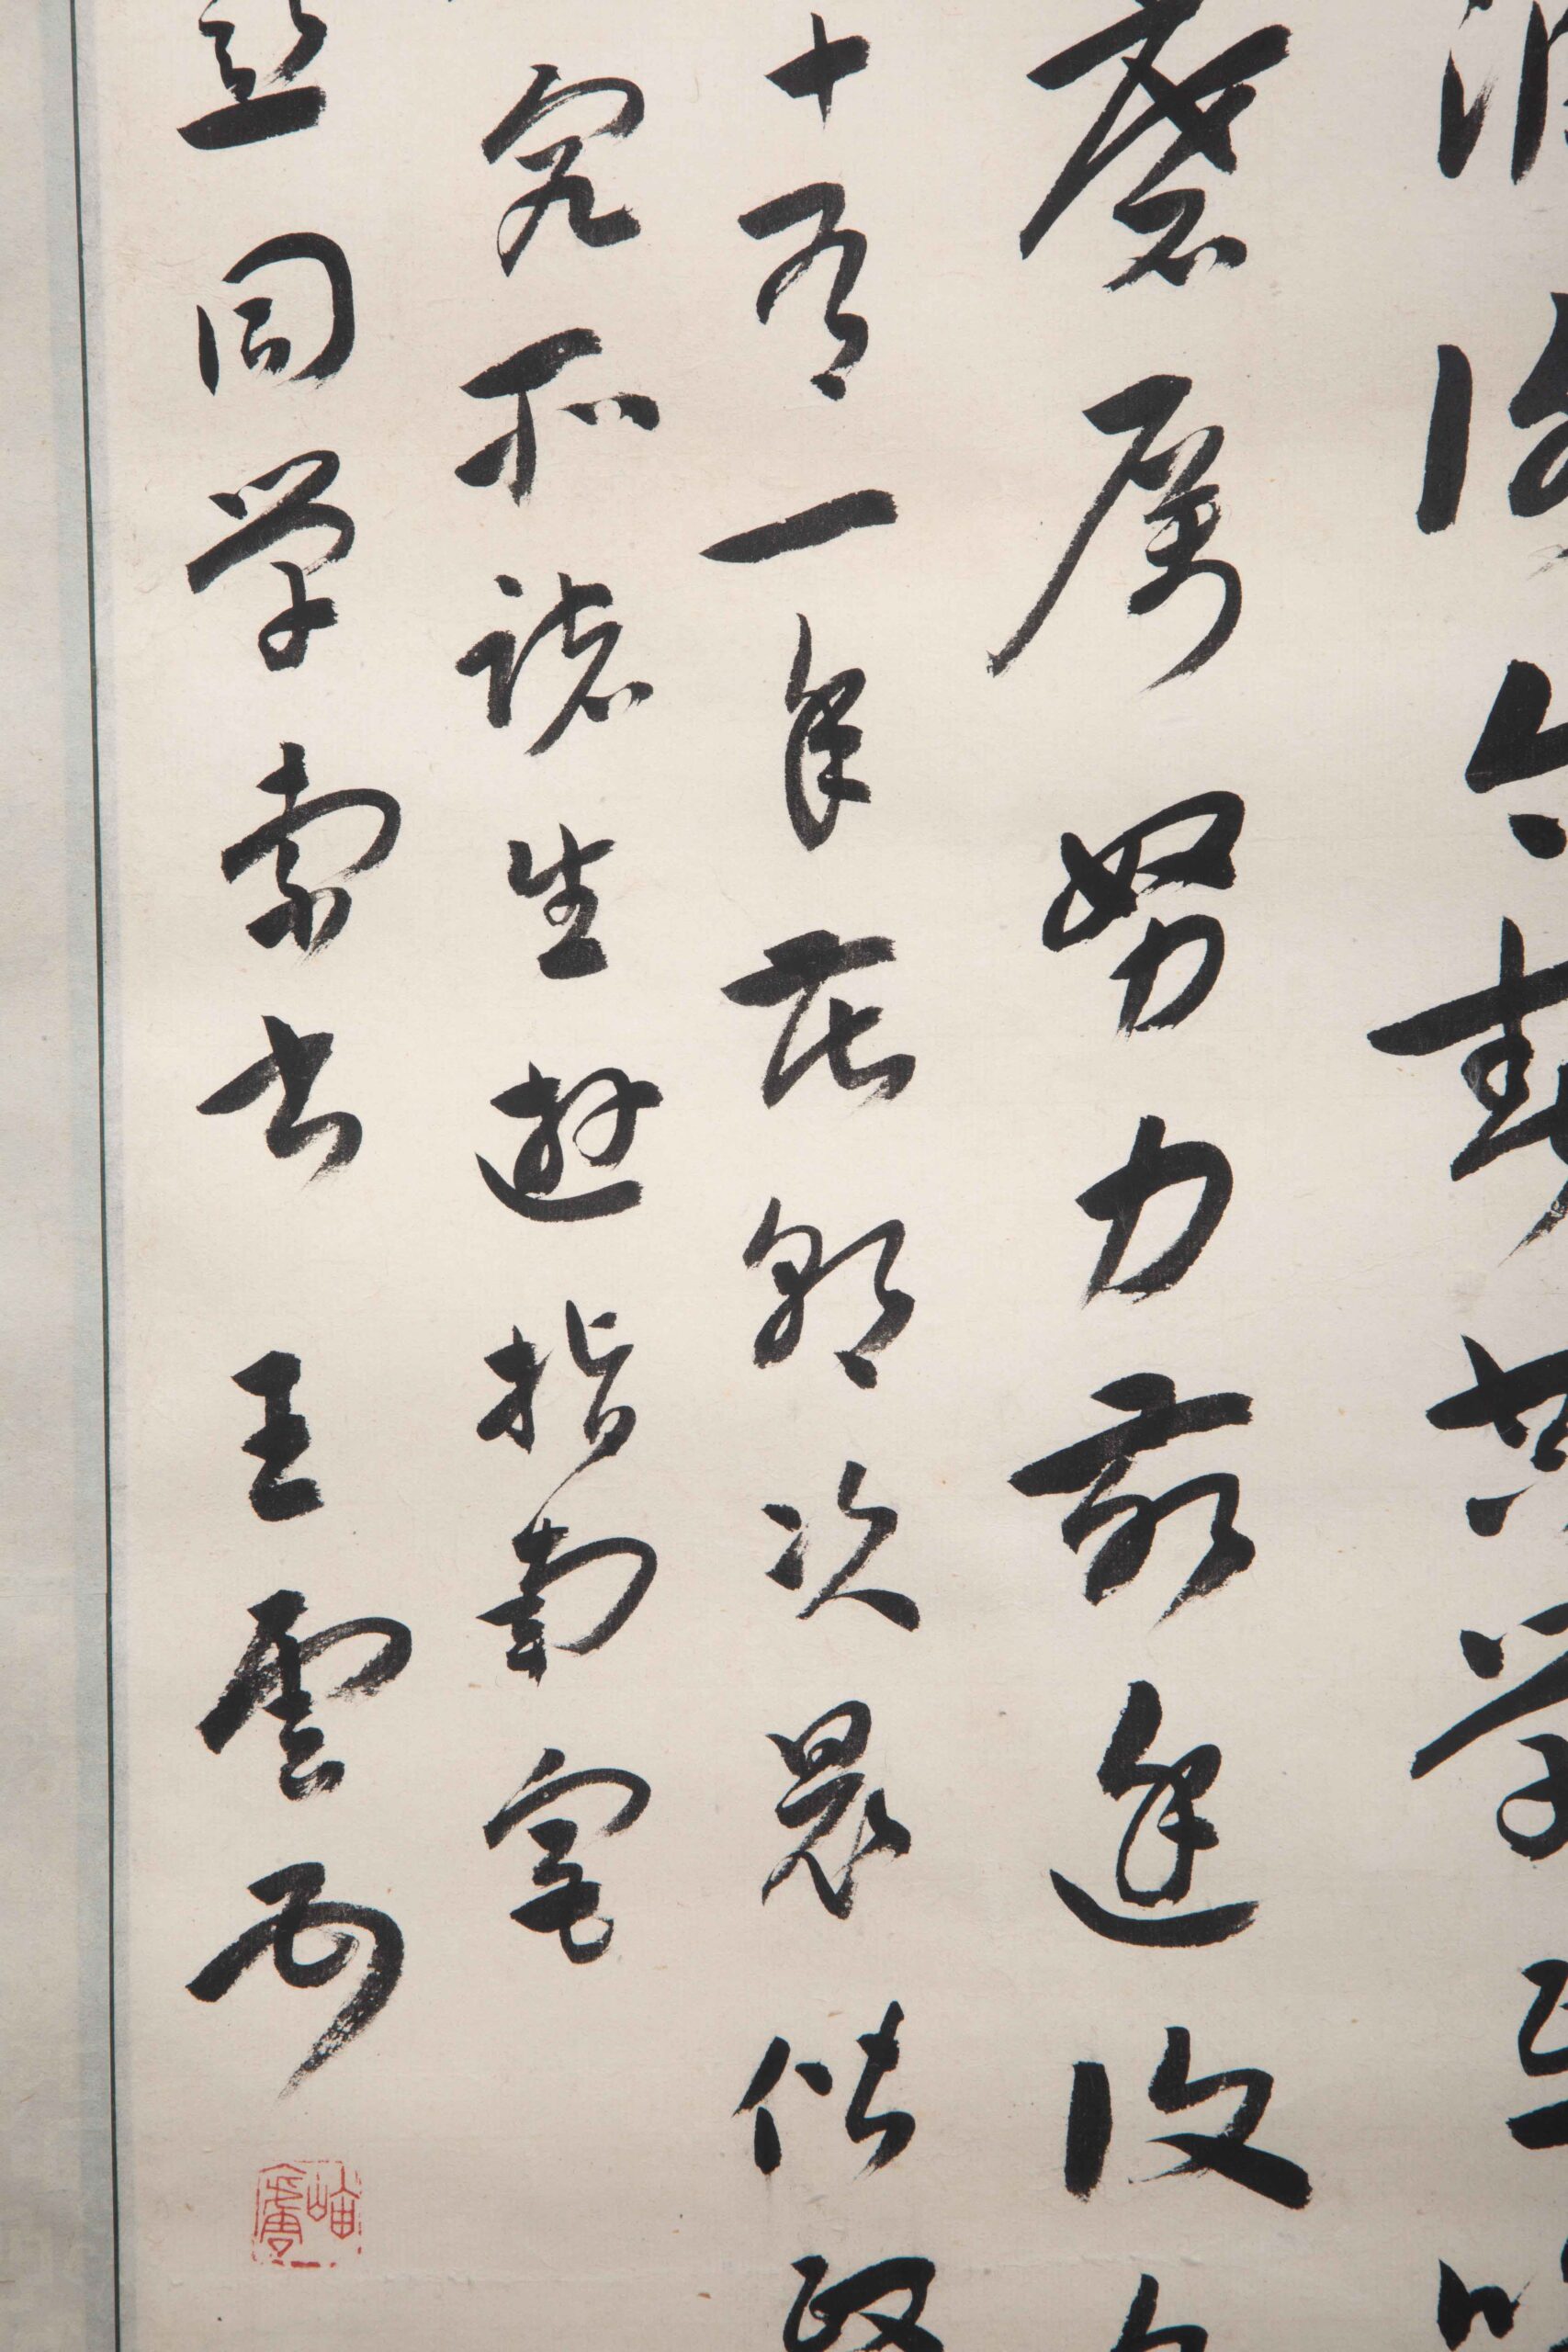 Chinese calligraphy by Wang Yunwu, Republic of China民国台湾行政院 